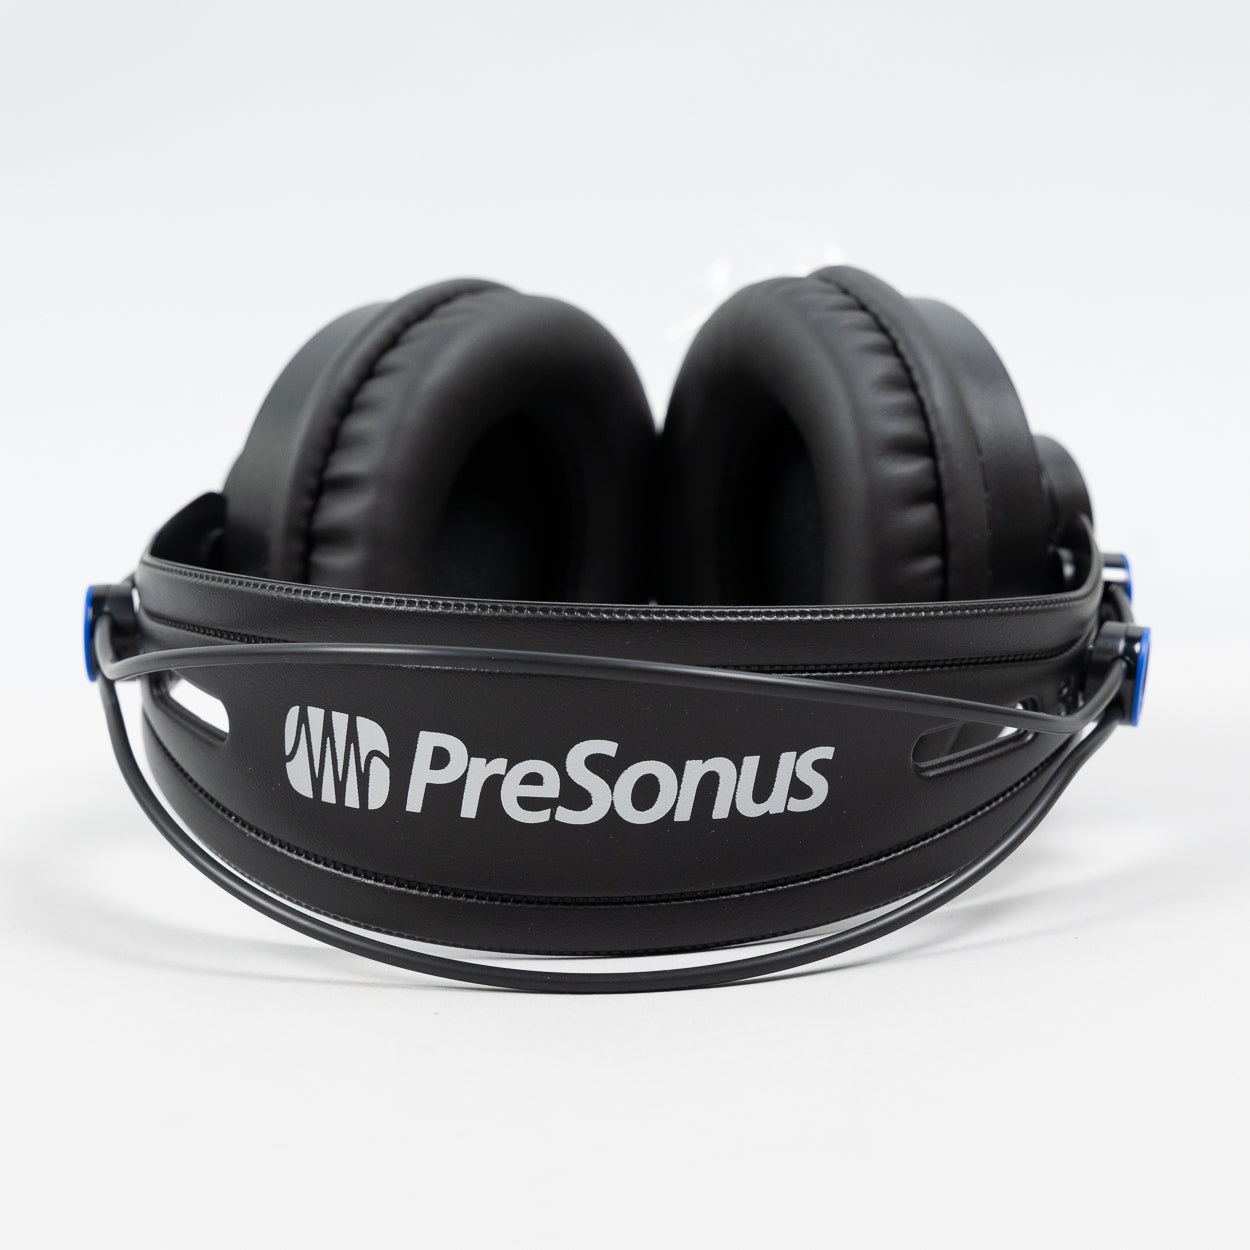 PreSonus HD7 Headphones